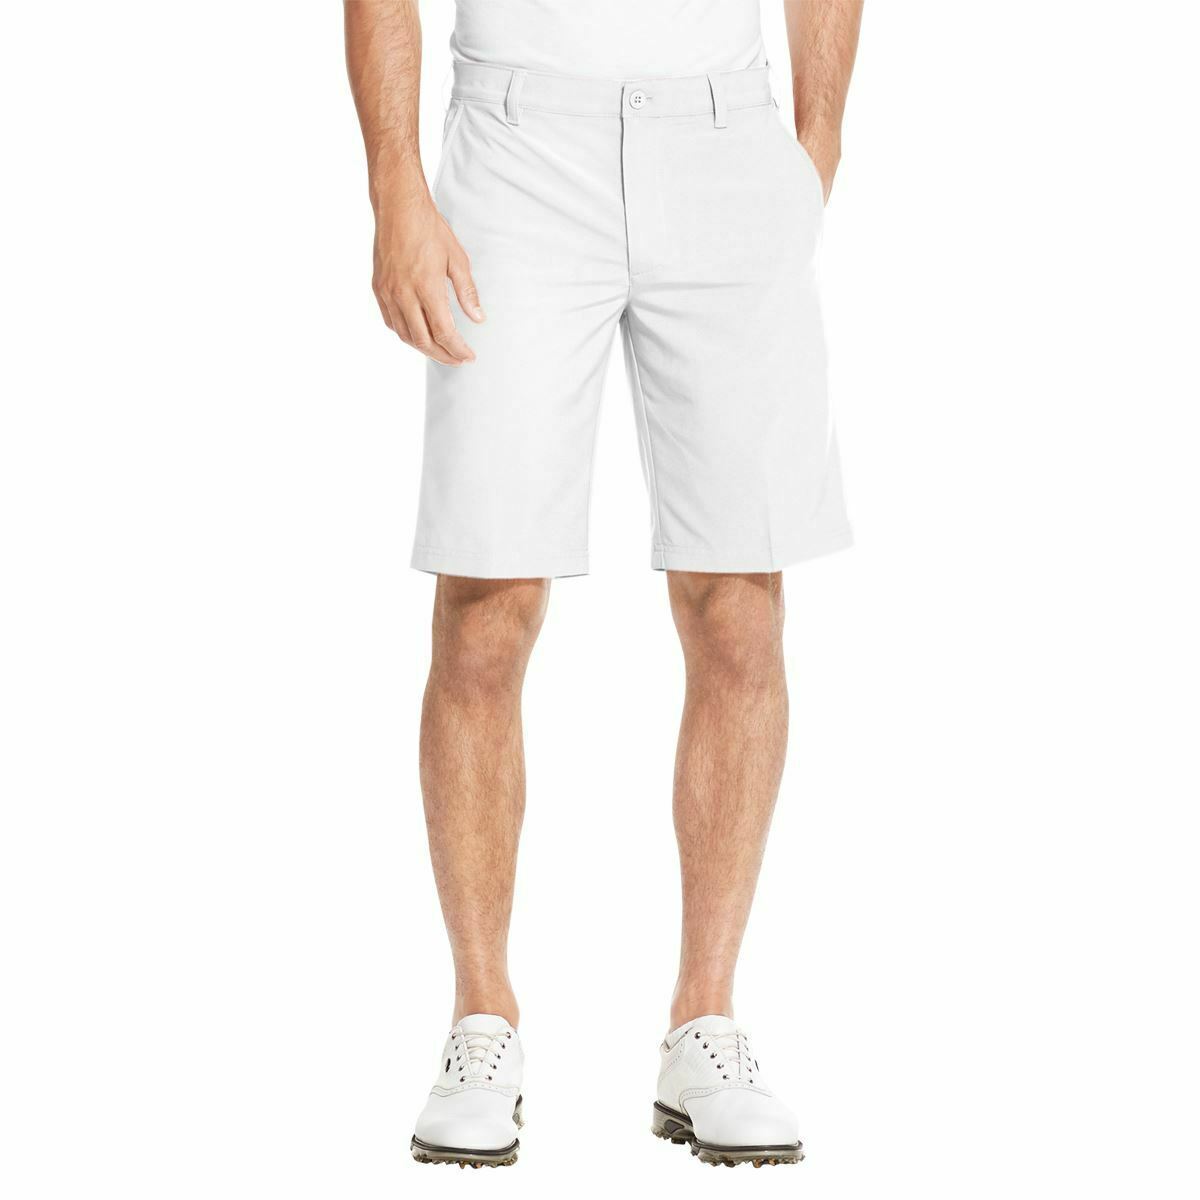 New IZOD Golf Men's Performance Classic Fit Shorts Size 44 White - Shorts